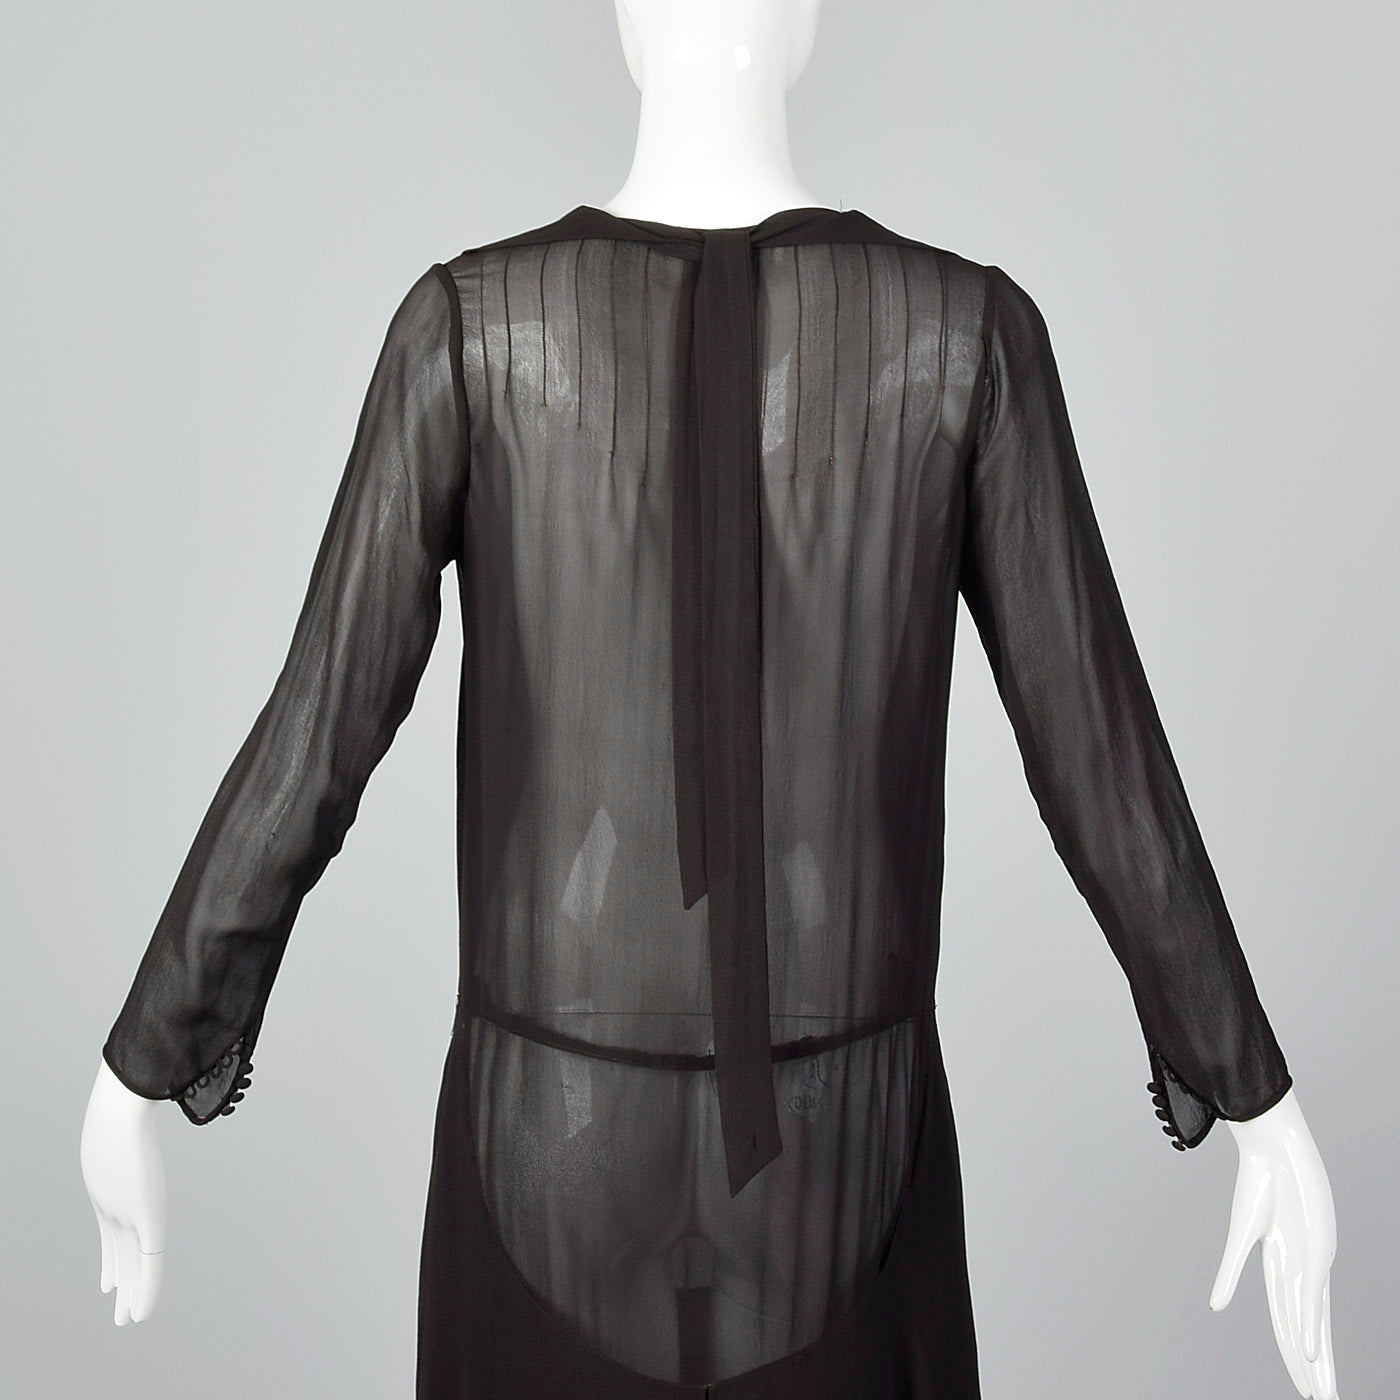 1920s Sheer Black Dress with Layered Skirt